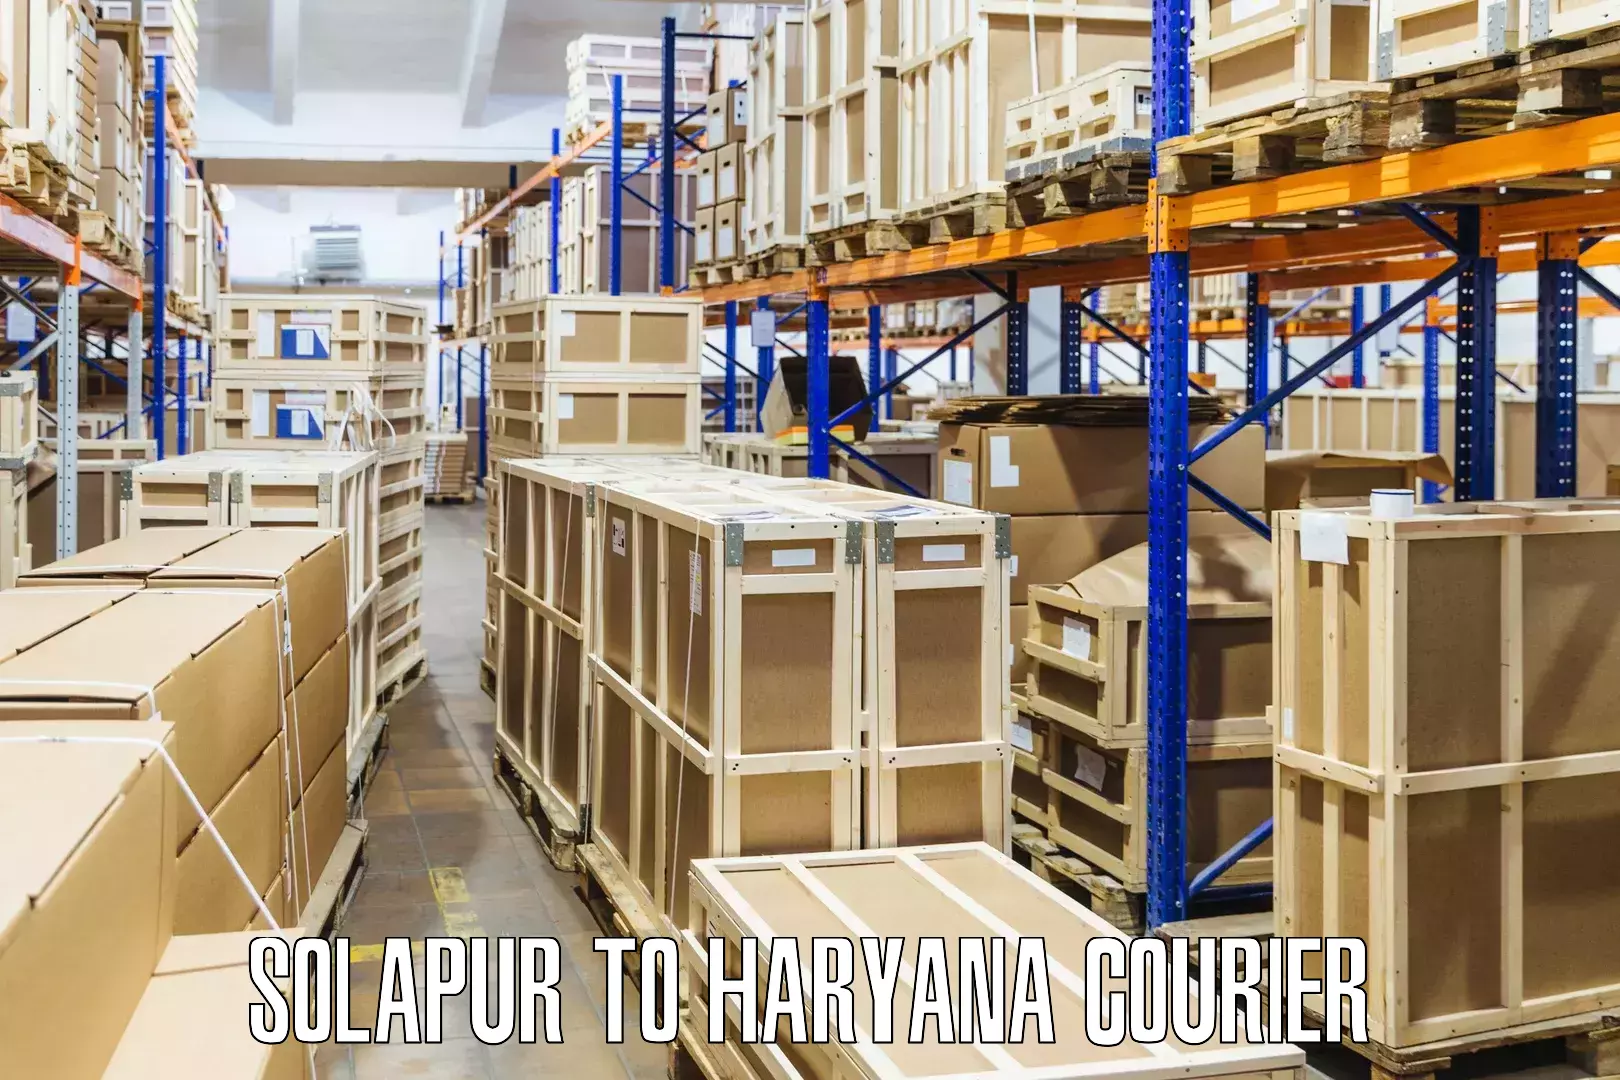 Courier service efficiency Solapur to Haryana